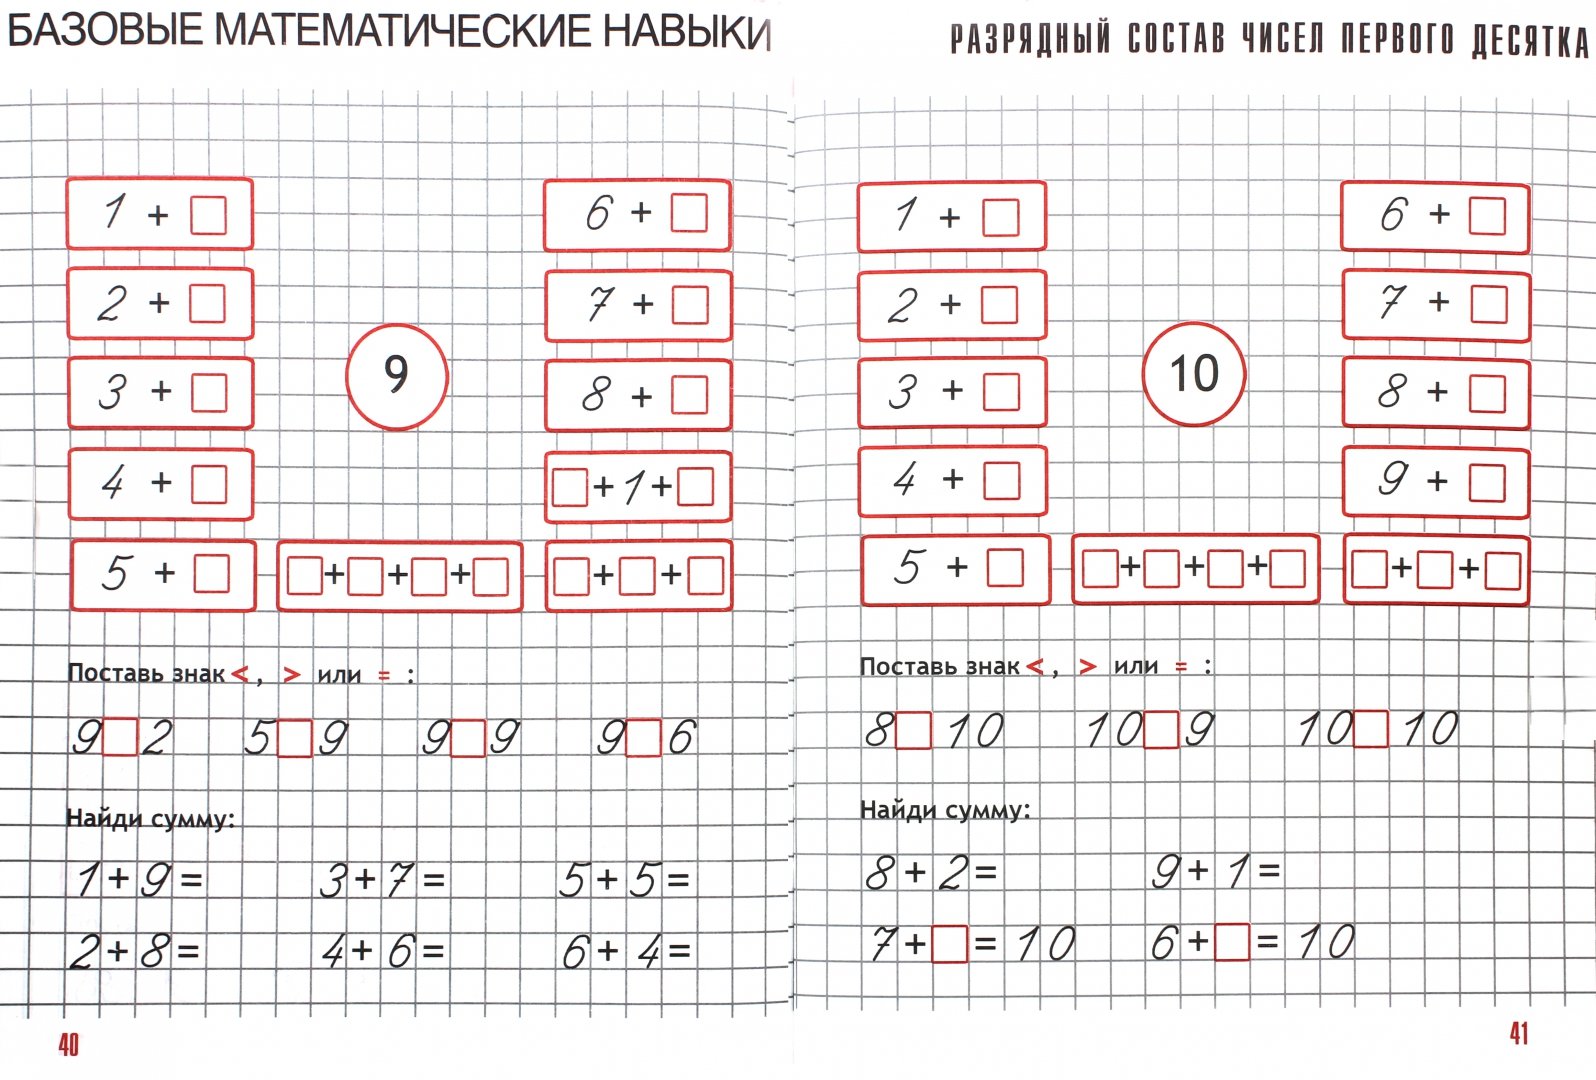 Иллюстрация 1 из 8 для Математика. 1 класс. Комплексный тренажер - Н. Латышева | Лабиринт - книги. Источник: Лабиринт